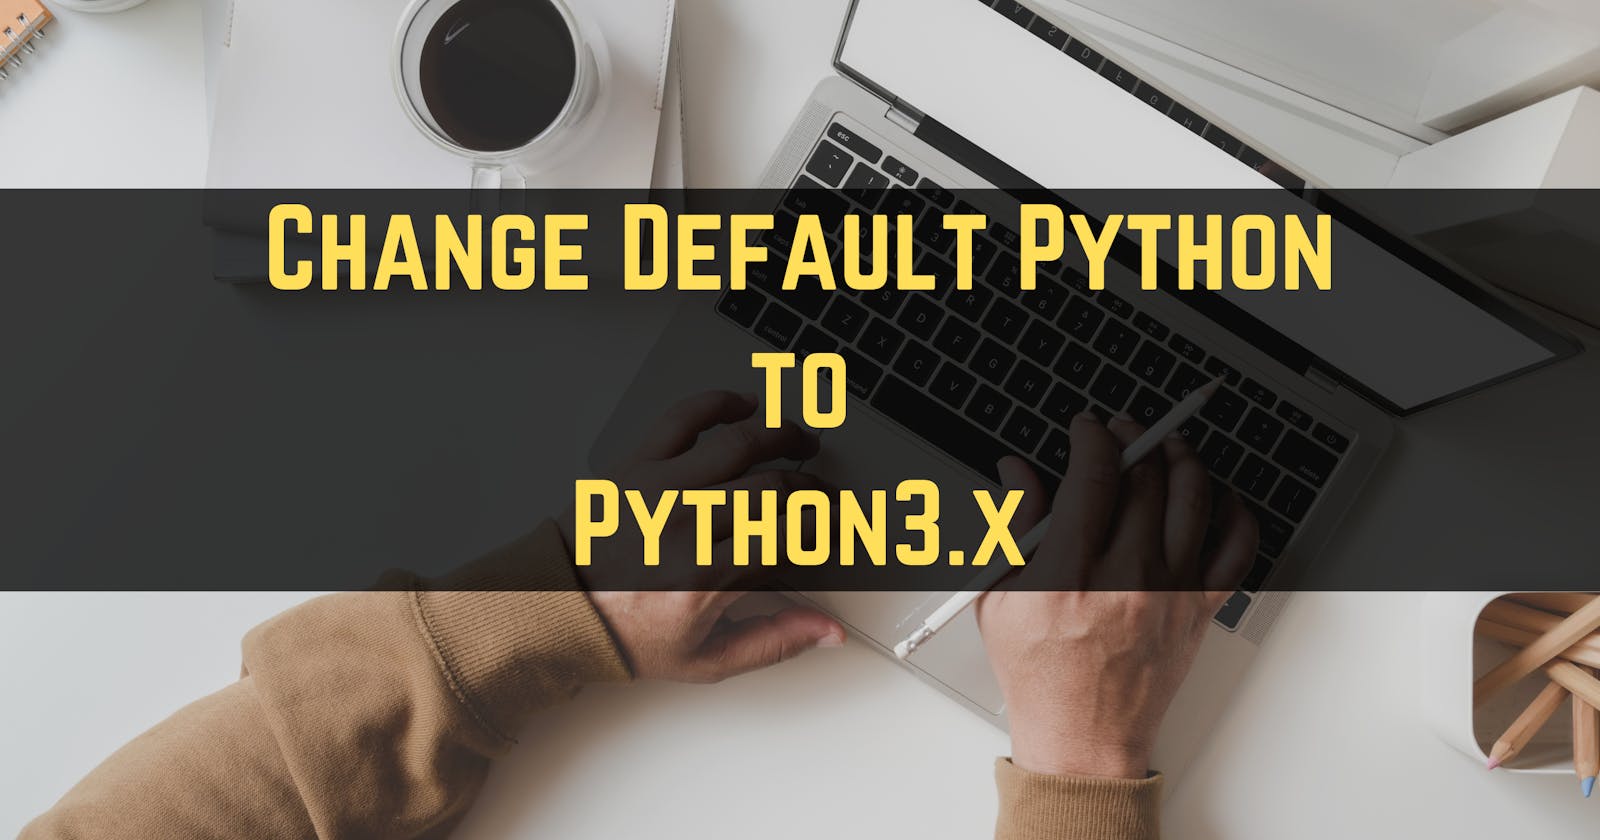 [MacOS] Change default Python to Python3 - HOW?